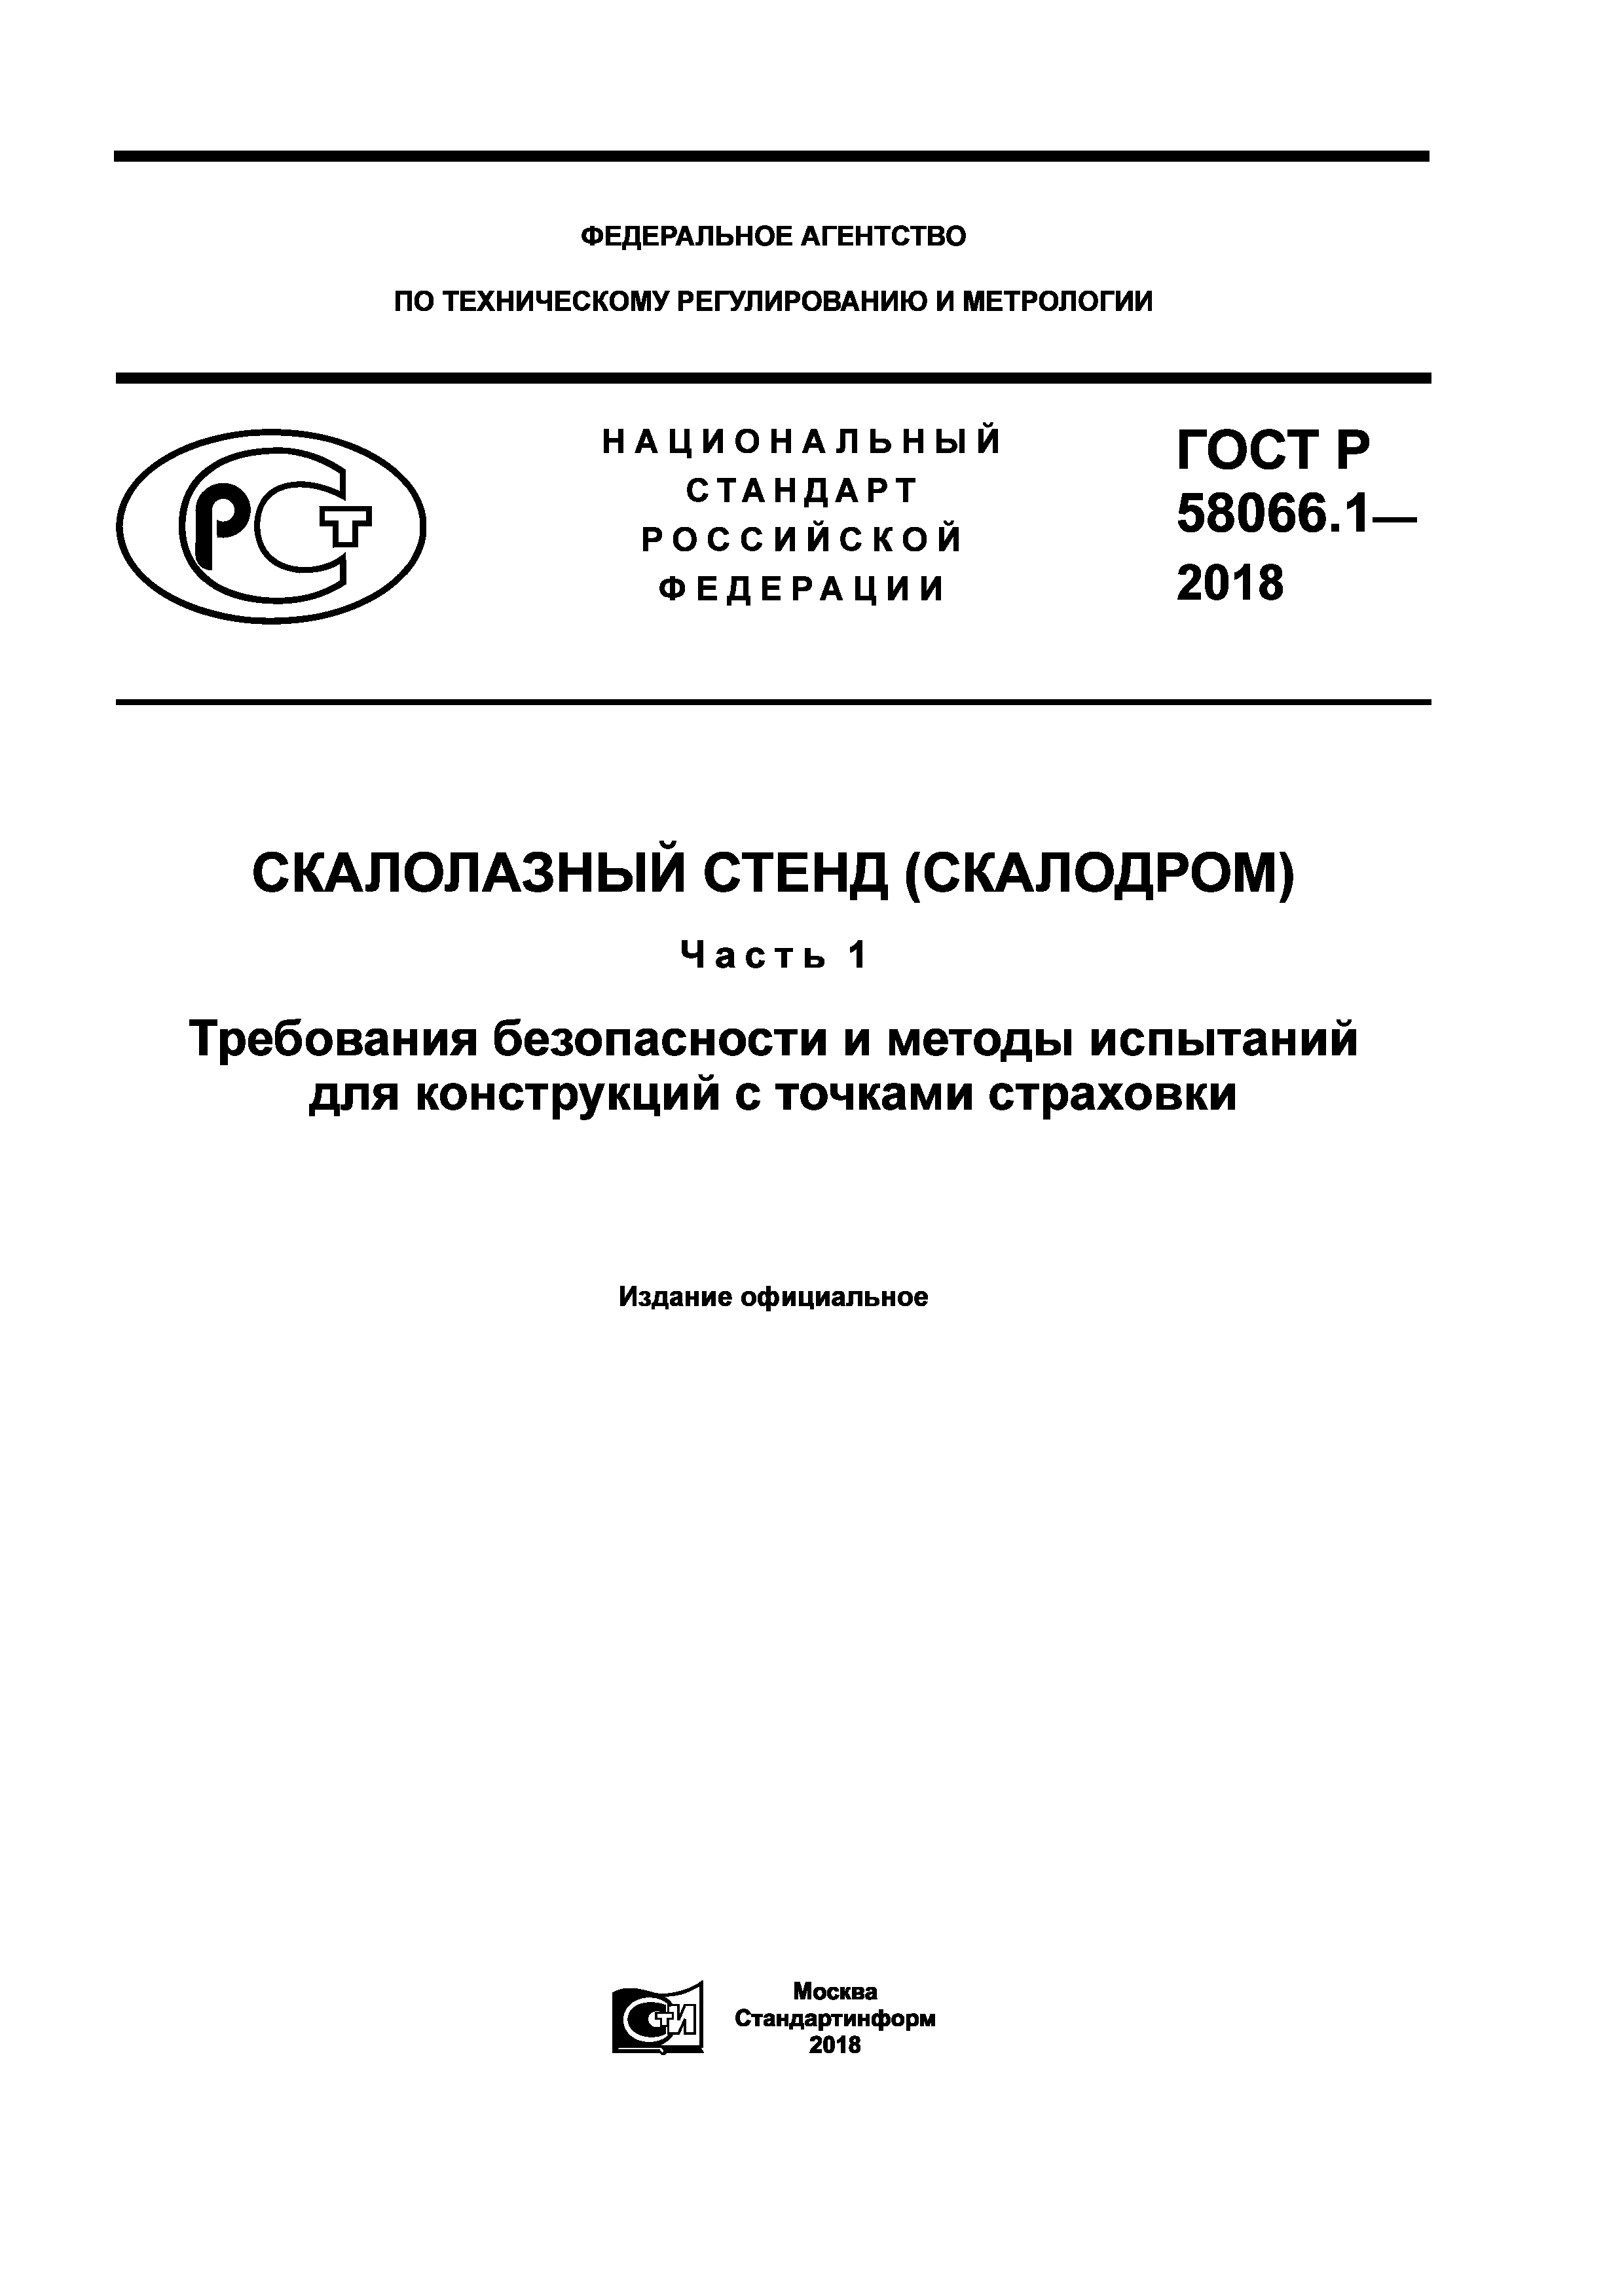 ГОСТ Р 58066.1-2018